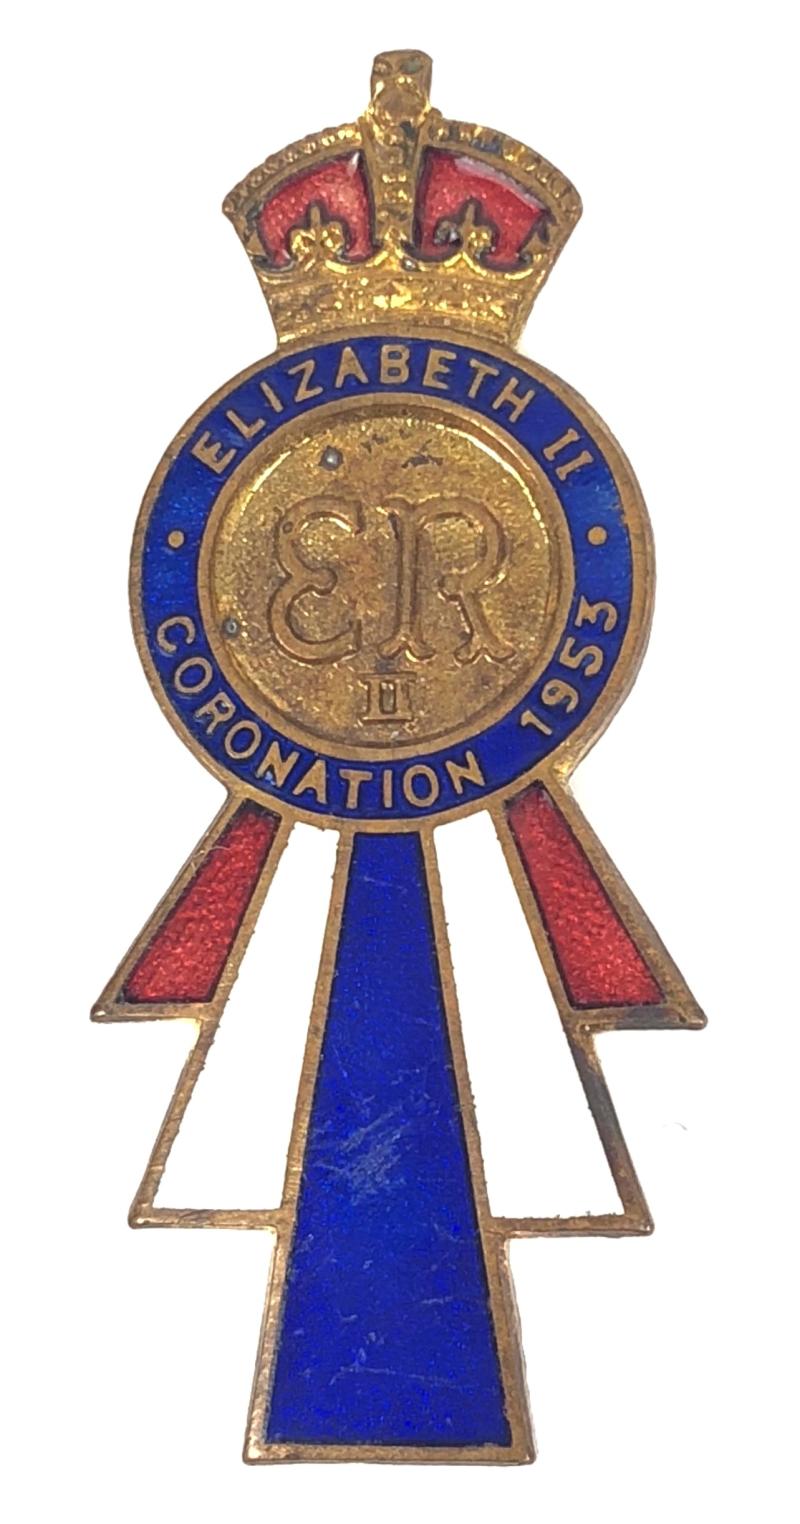 Coronation of Queen Elizabeth II June 1953 Lanark Scotland souvenir badge